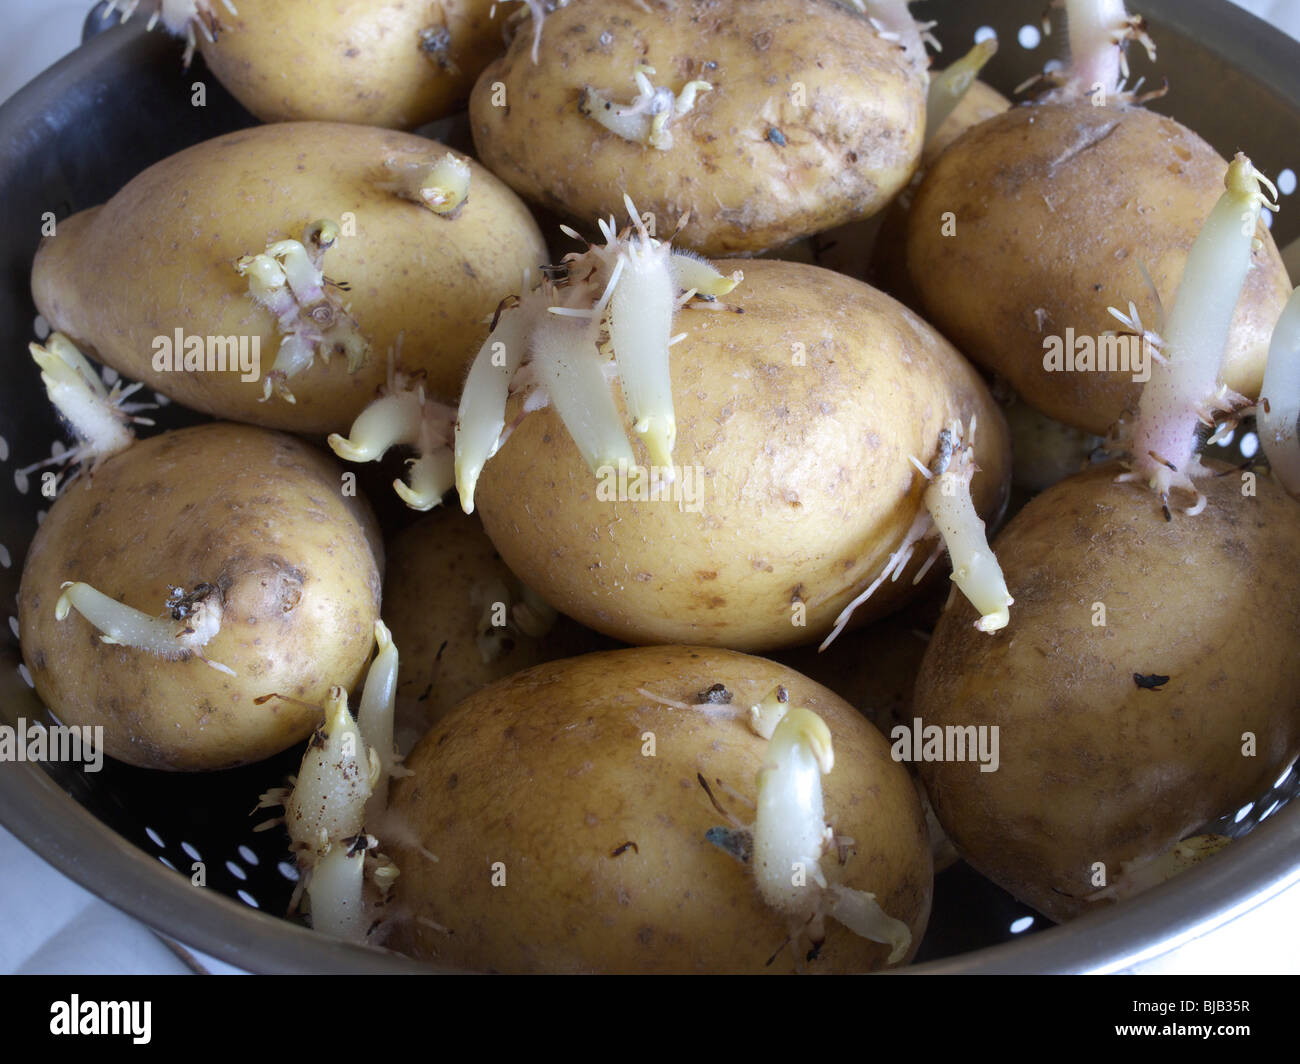 Sprouting potatoes.England, UK. Stock Photo